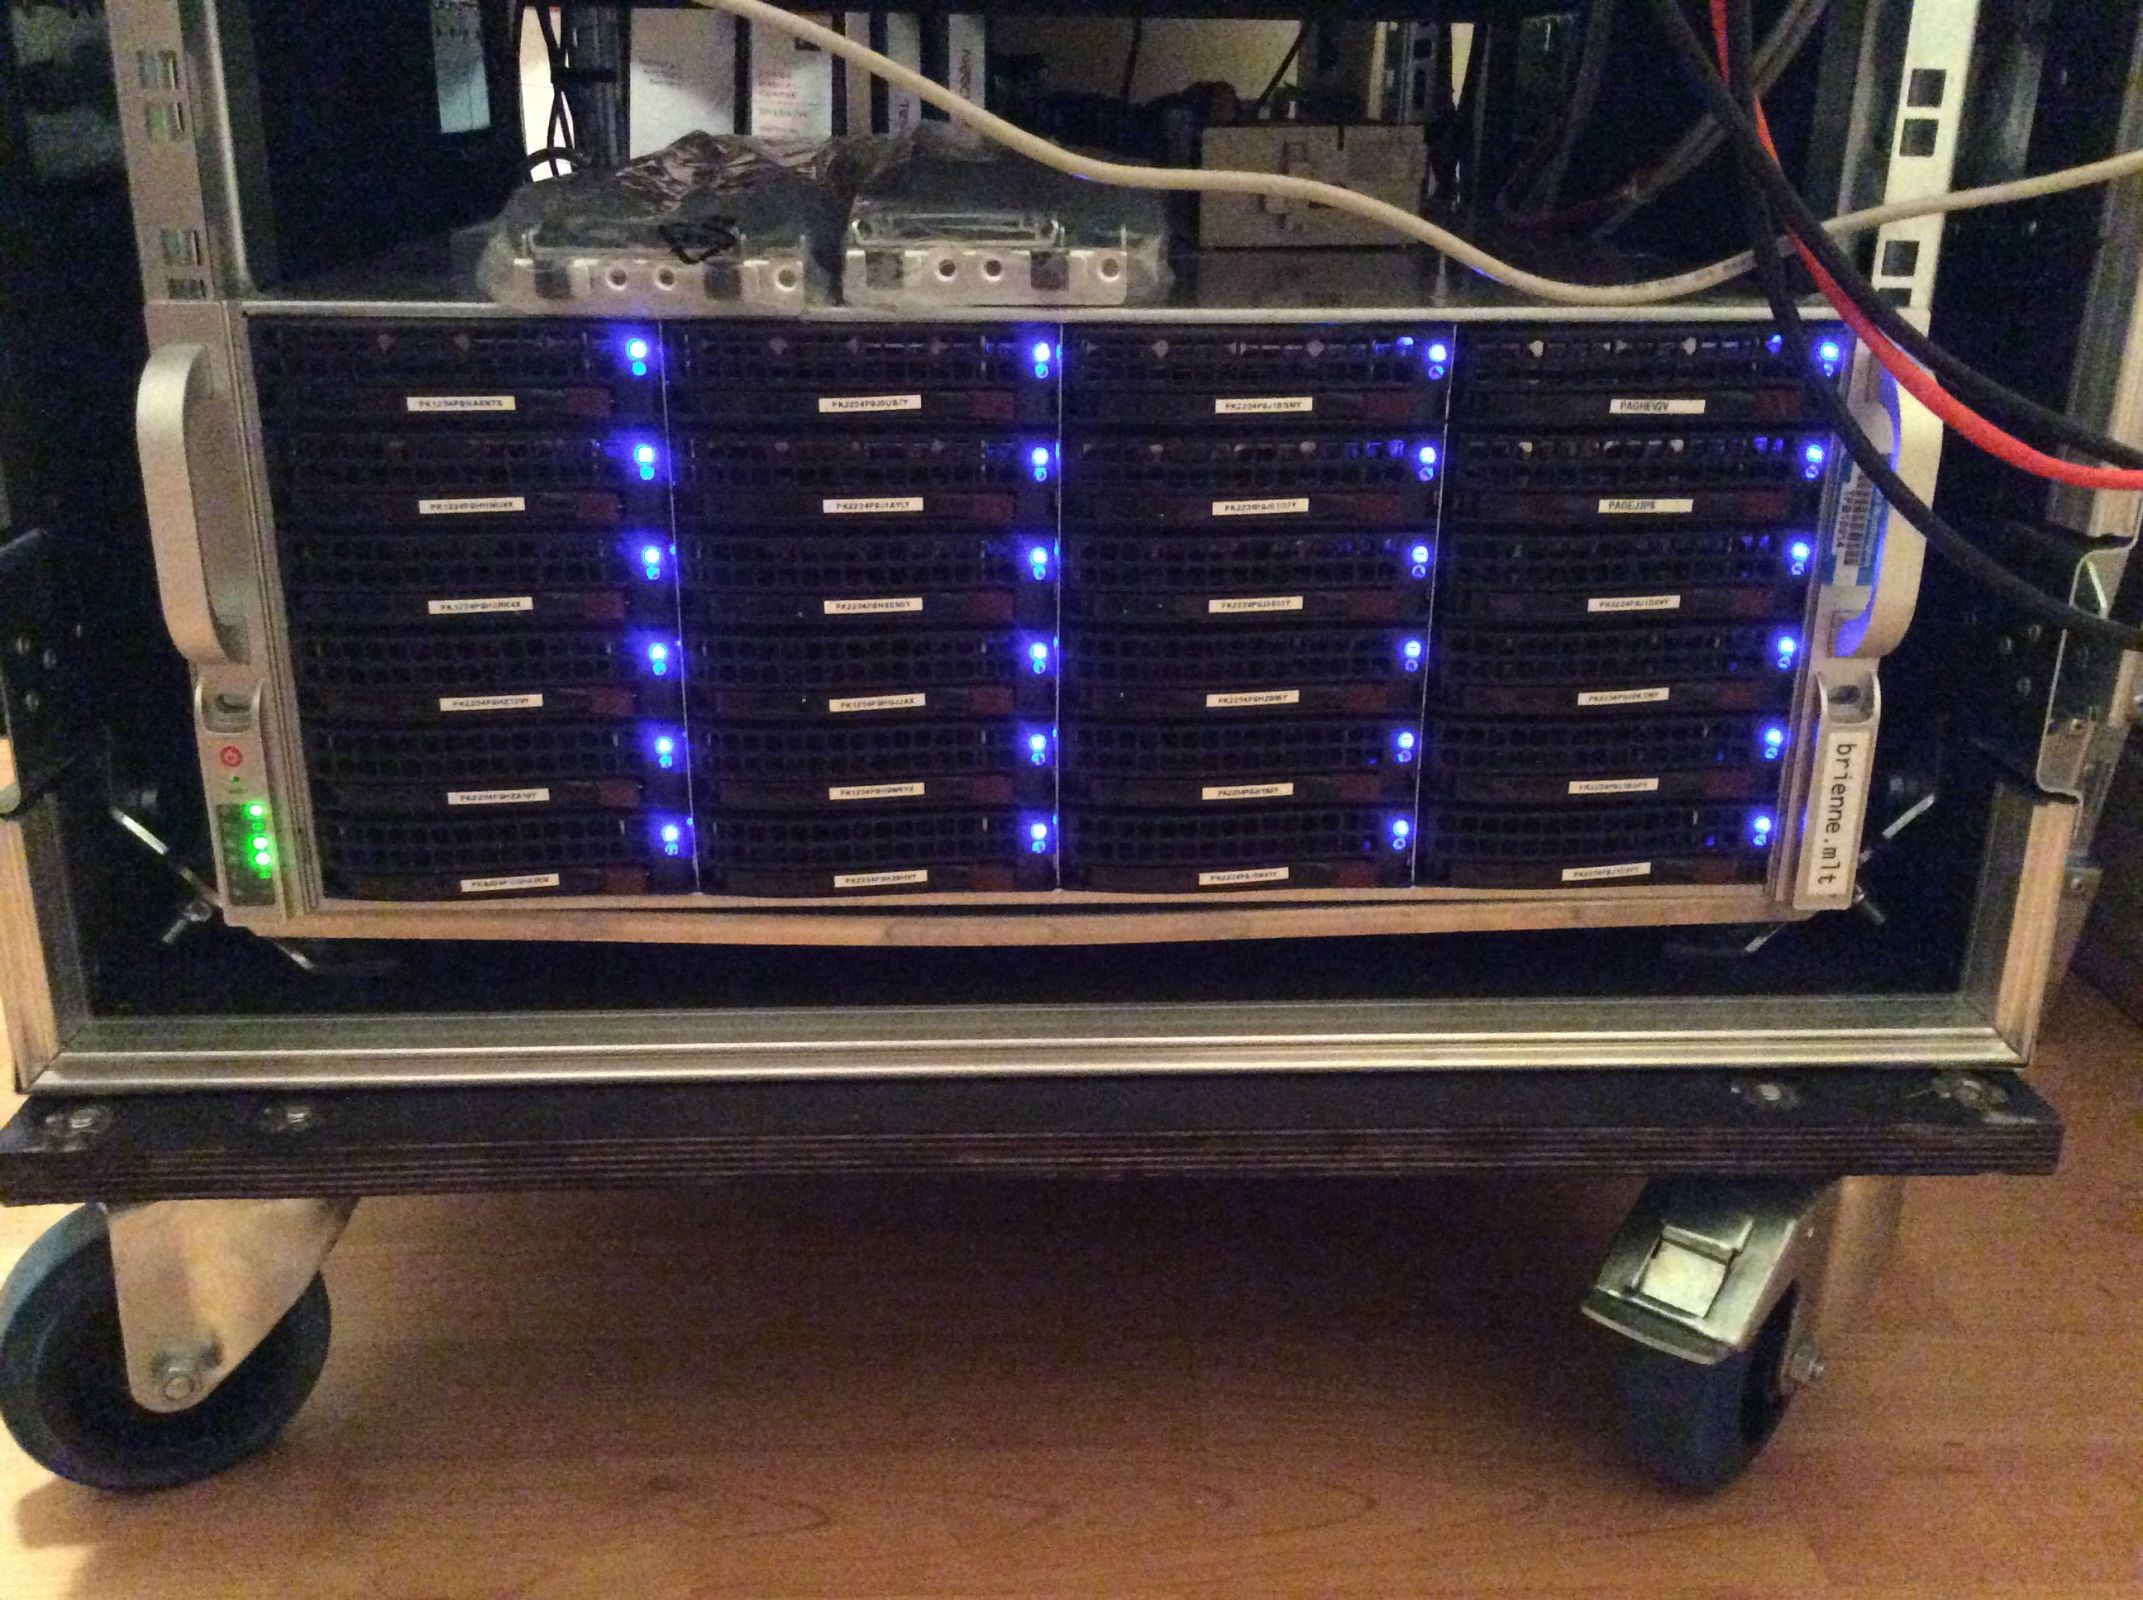 My darling storage server